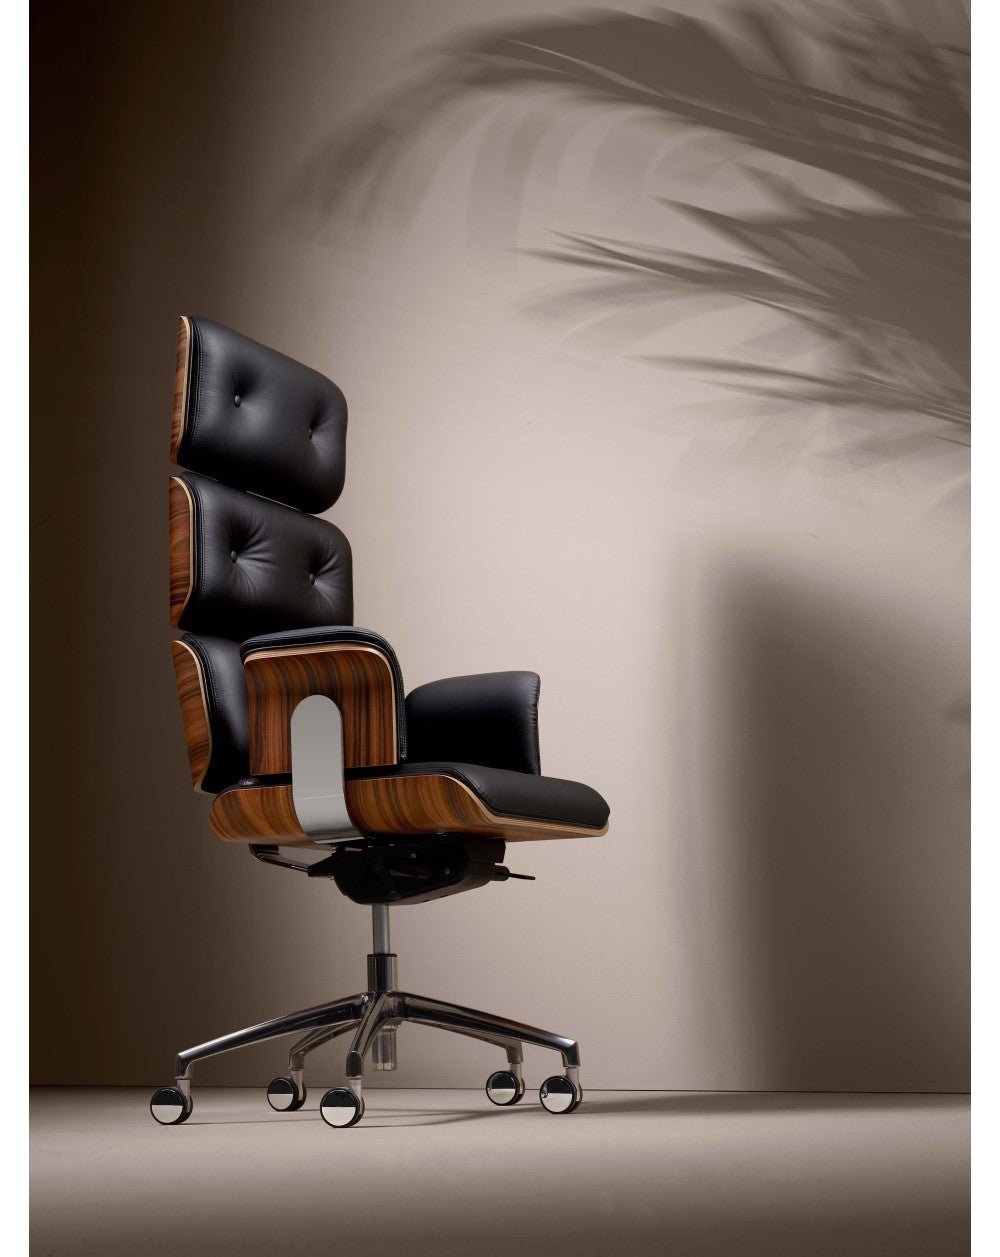 Armadillo Matt Black Luxury Office Chair with High Back / Genuine Italian Leather - |VESIMI Design|